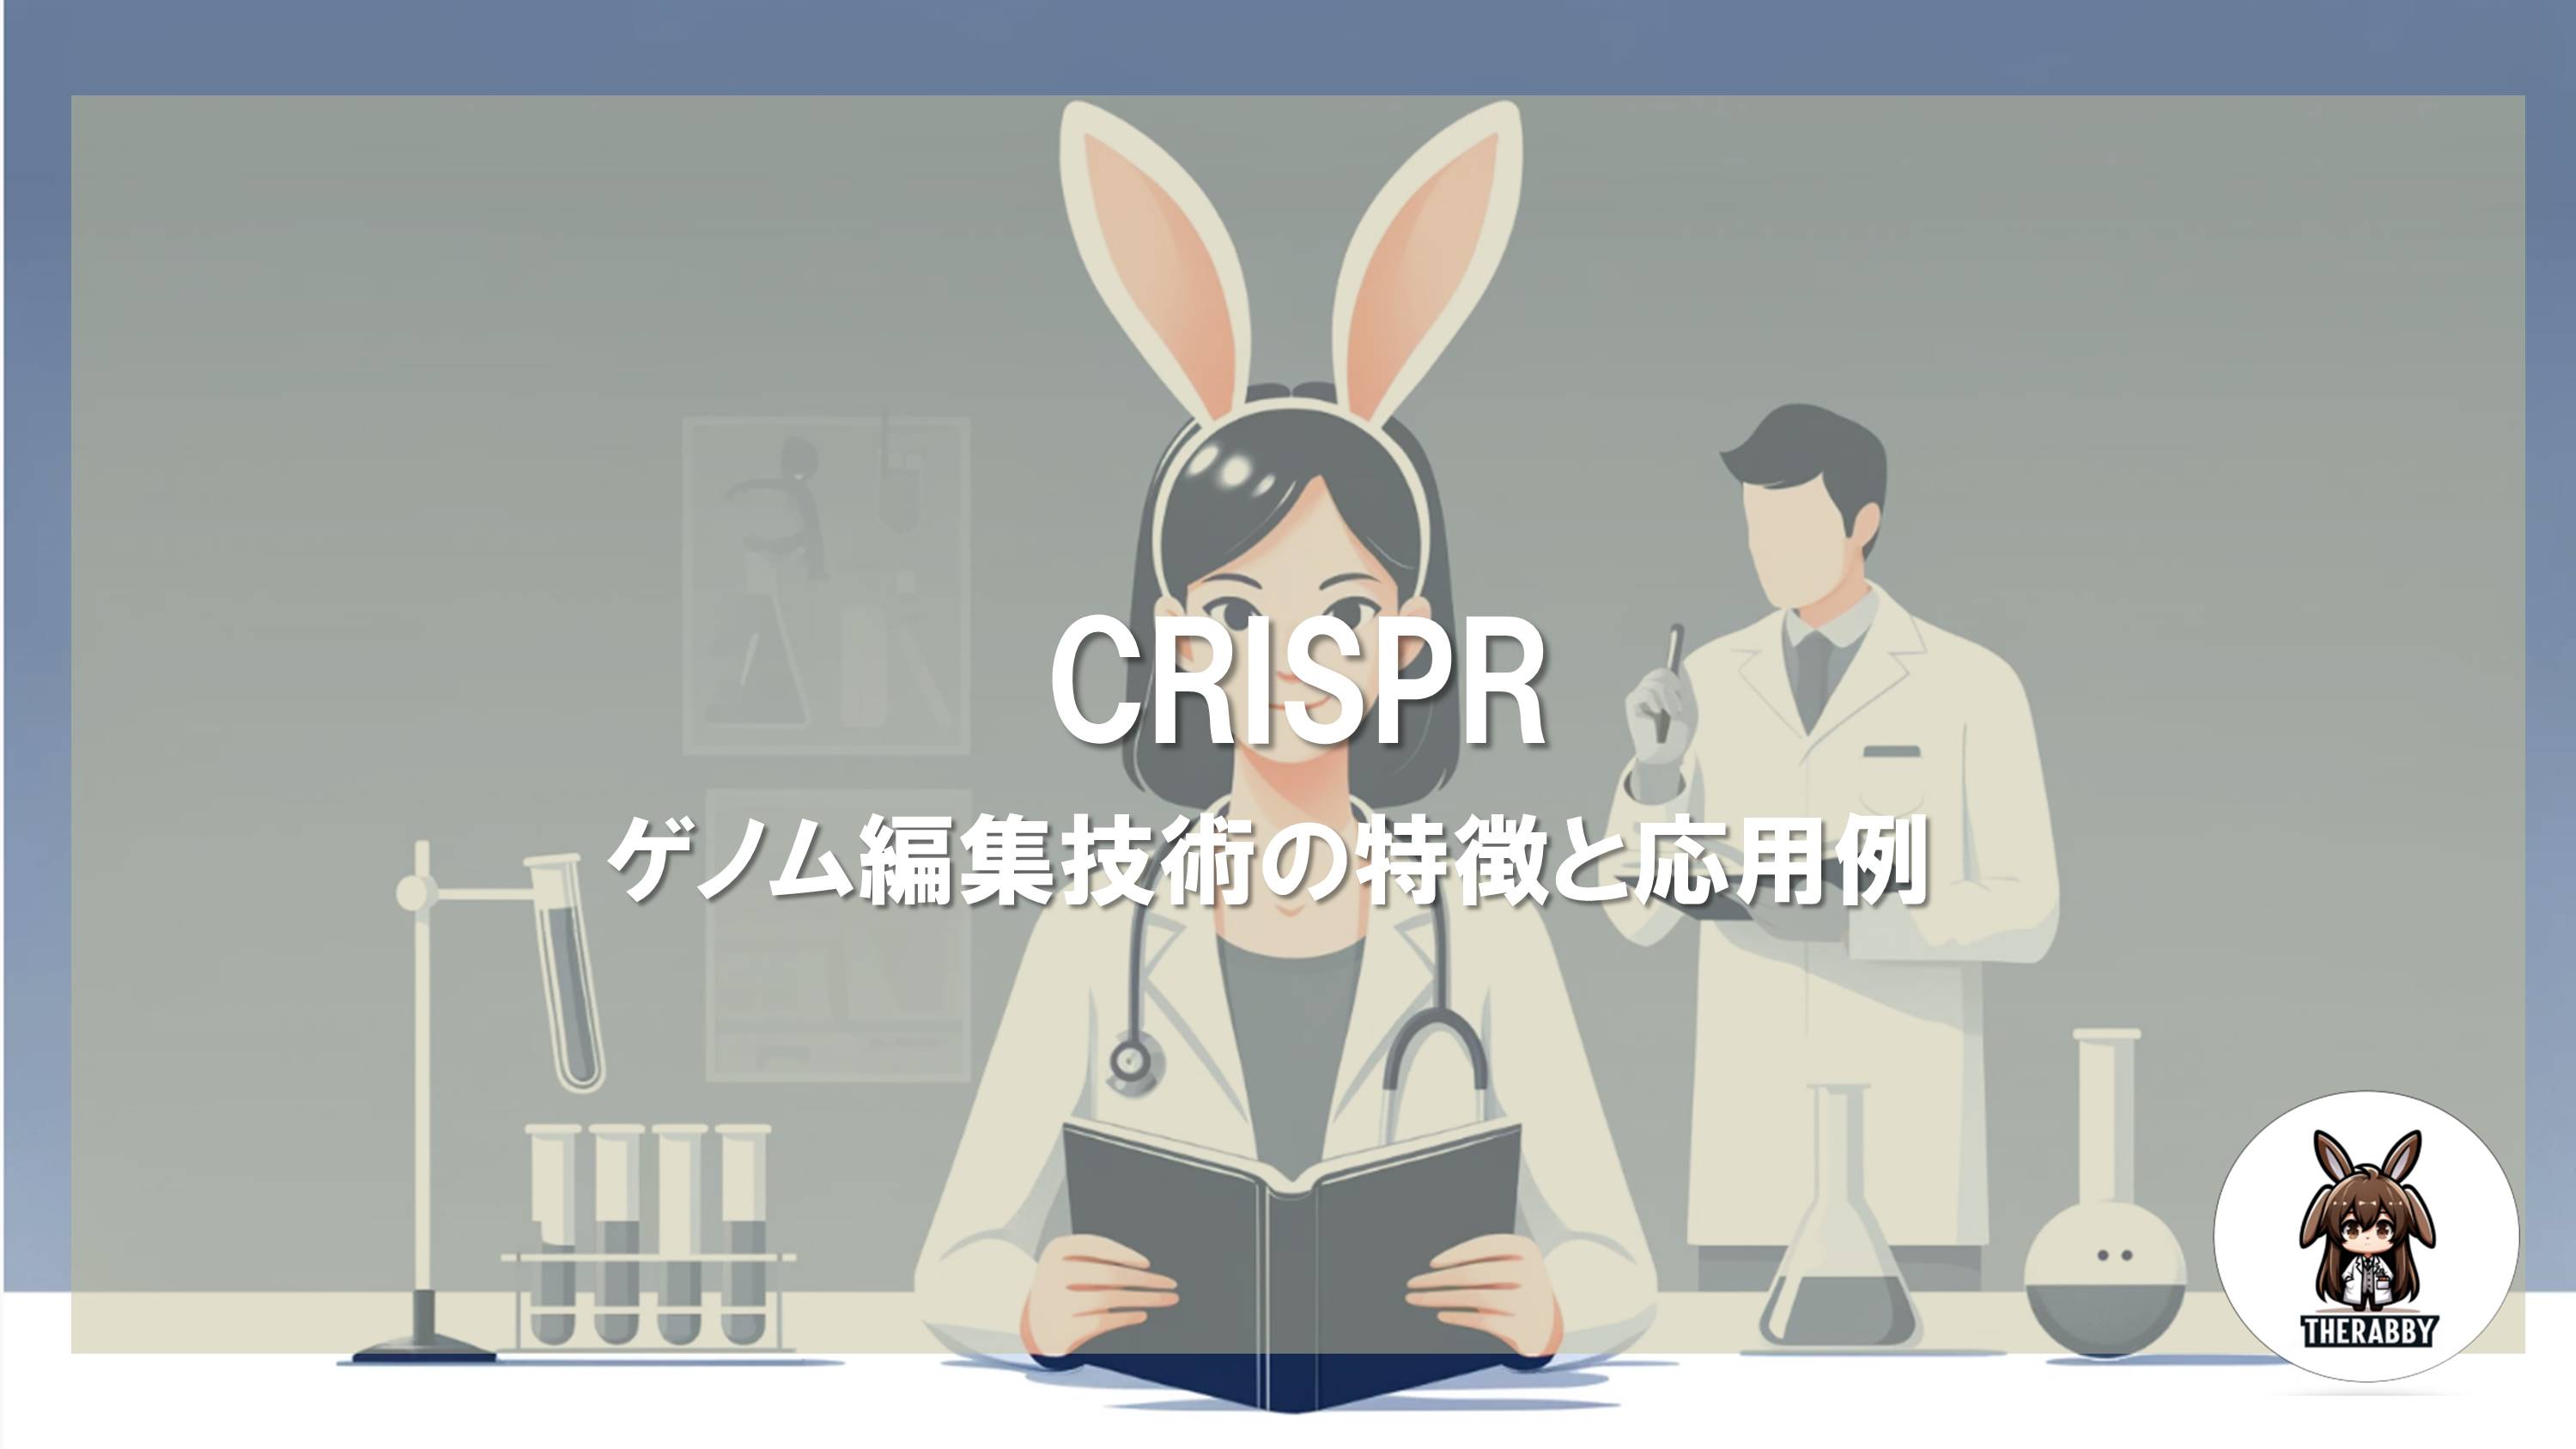 CRISPR - ゲノム編集技術の特徴と応用例